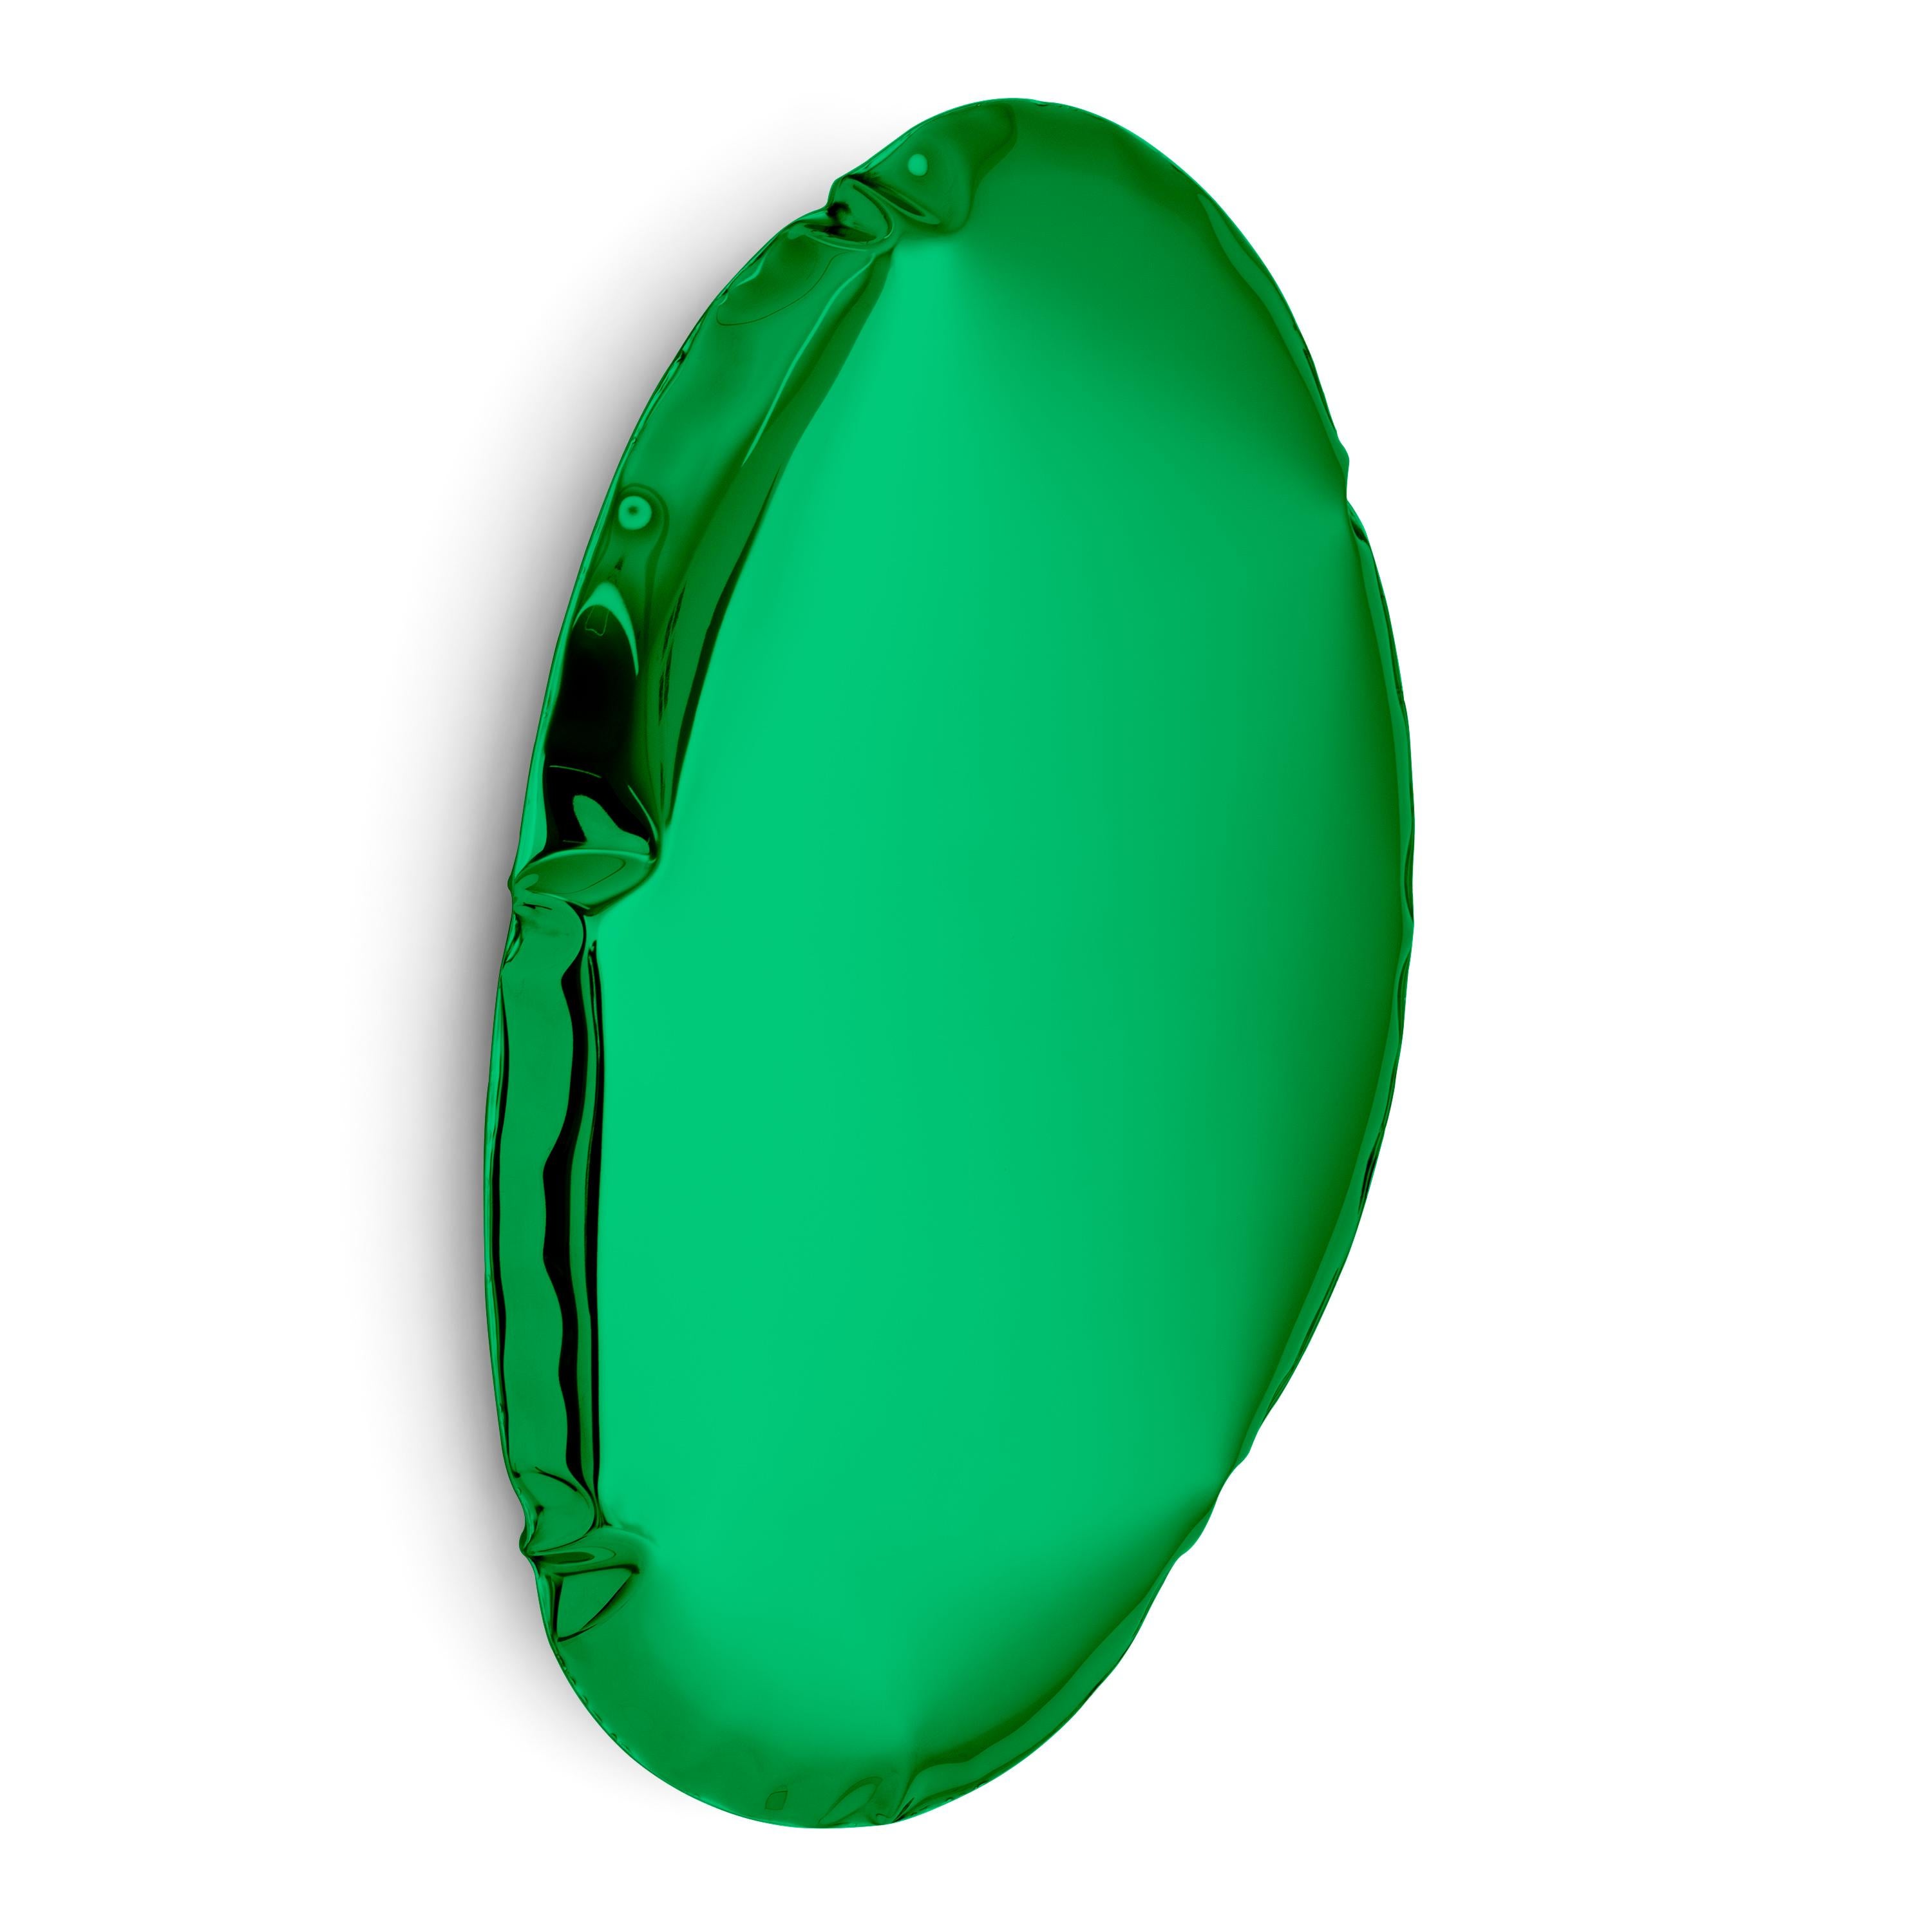 Emerald Tafla O5 Wall Mirror by Zieta
Dimensions: D 6 x W 40 x H 60 cm 
Material: Stainless steel.
Finish: Emerald.
Available finishes: Stainless Steel, White Matt, Sapphire/Emerald, Sapphire, Emerald, Deep space blue, Dark matter, or red Rubin.